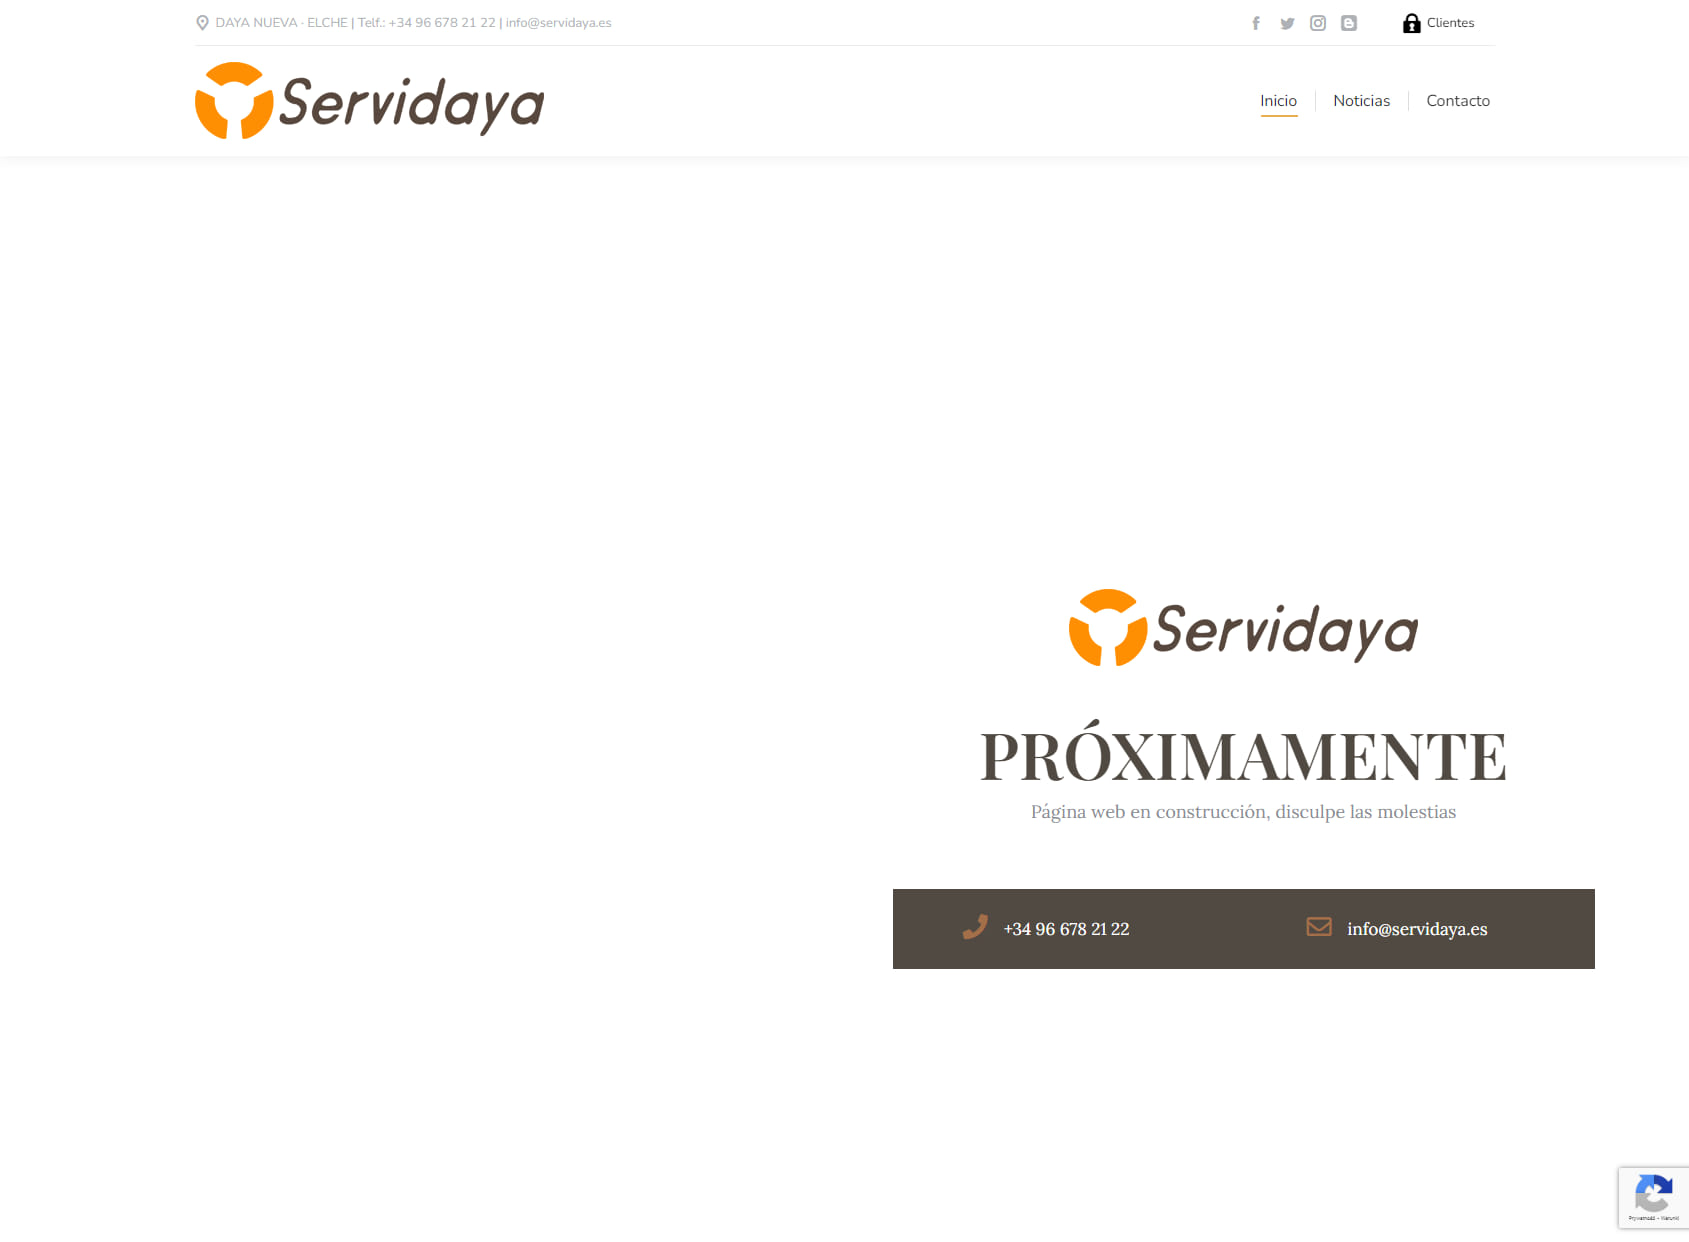 Servidaya (Elche)